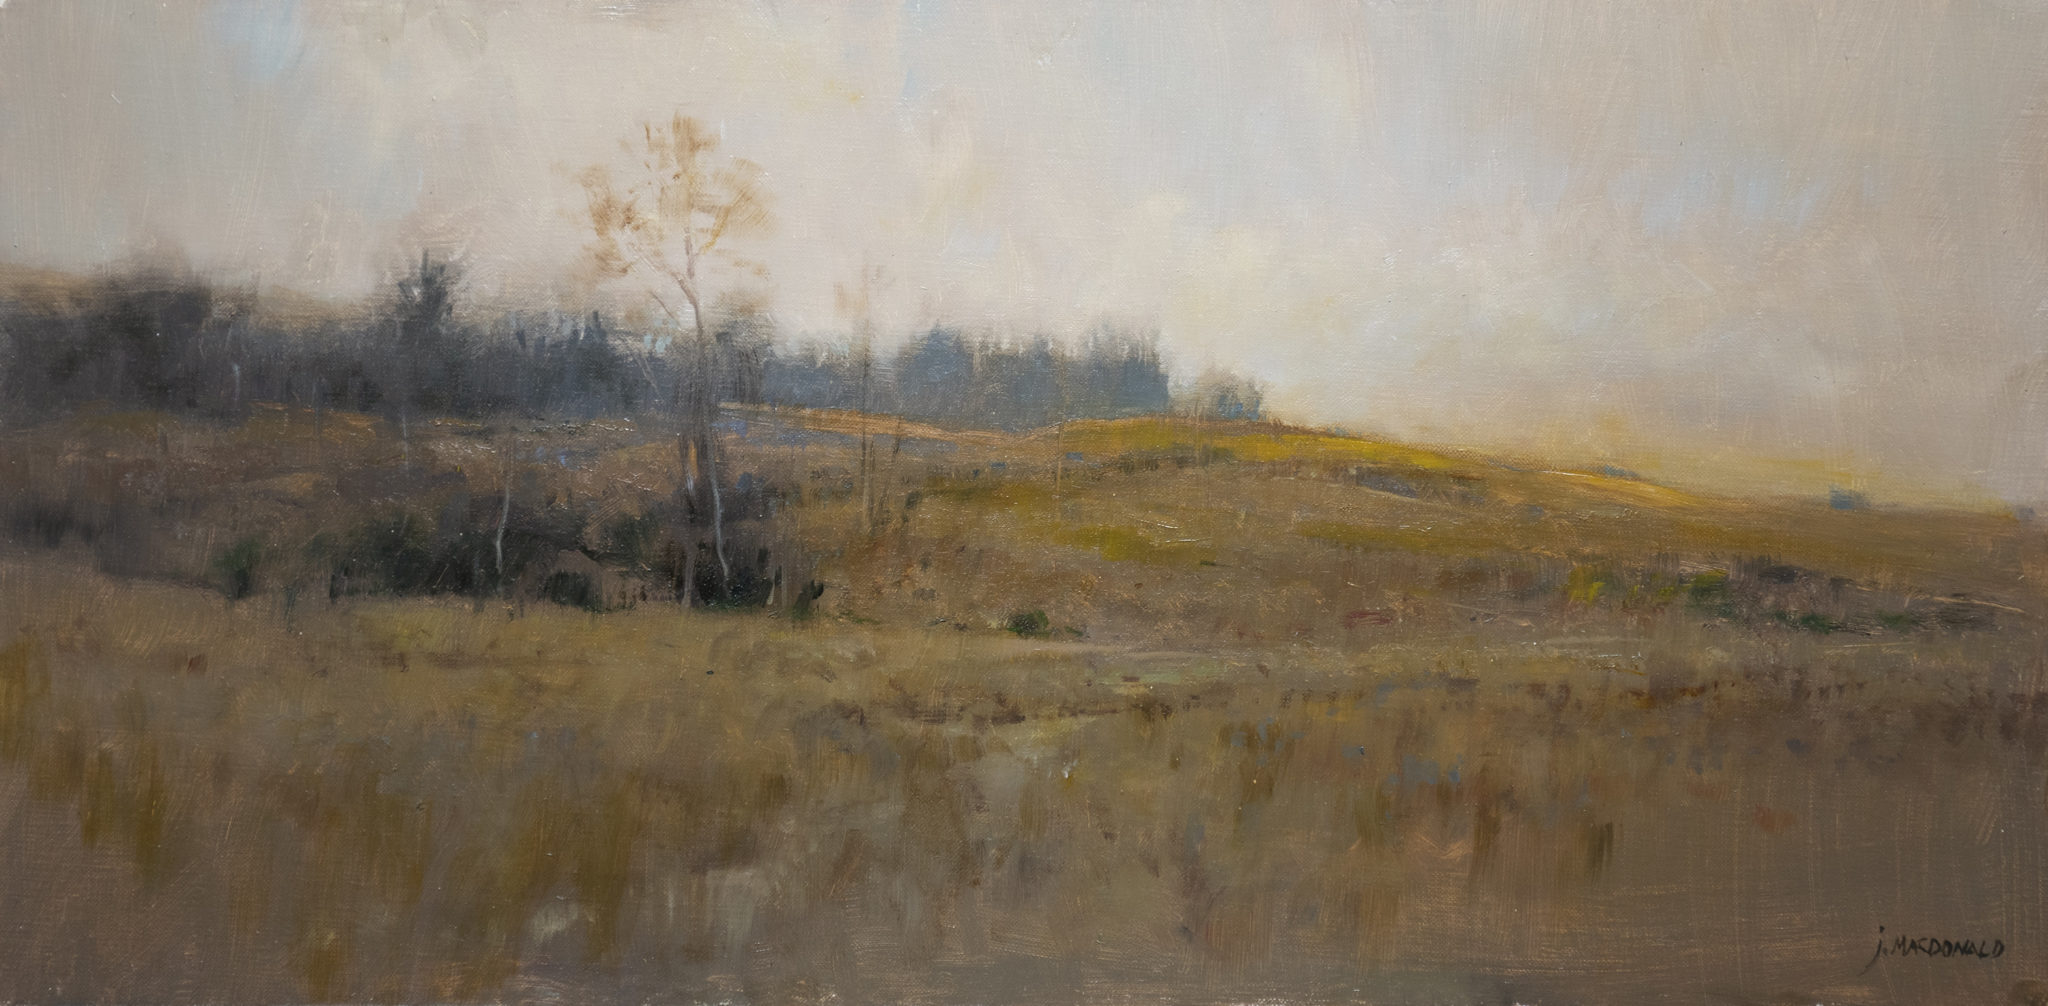 How to paint landscapes - John MacDonald, 